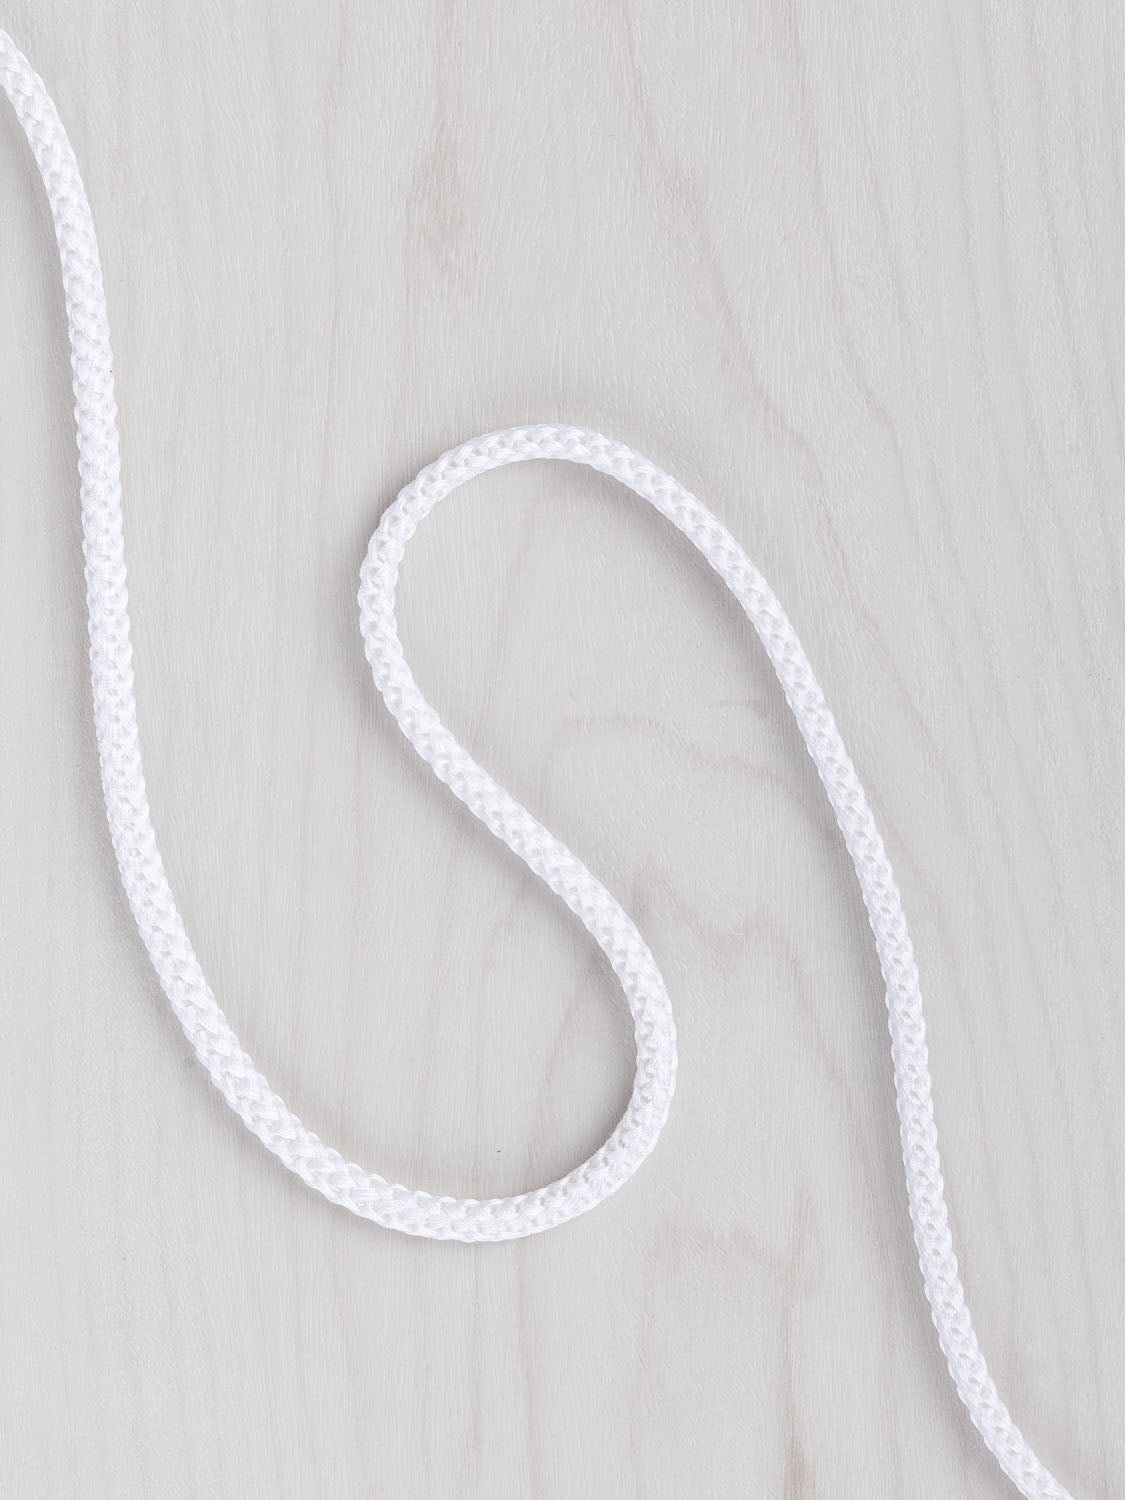 Plain White Cotton Drawstring Cord, For Bag, Size: 1 To 5 mm at Rs 225/kg  in Gandhinagar